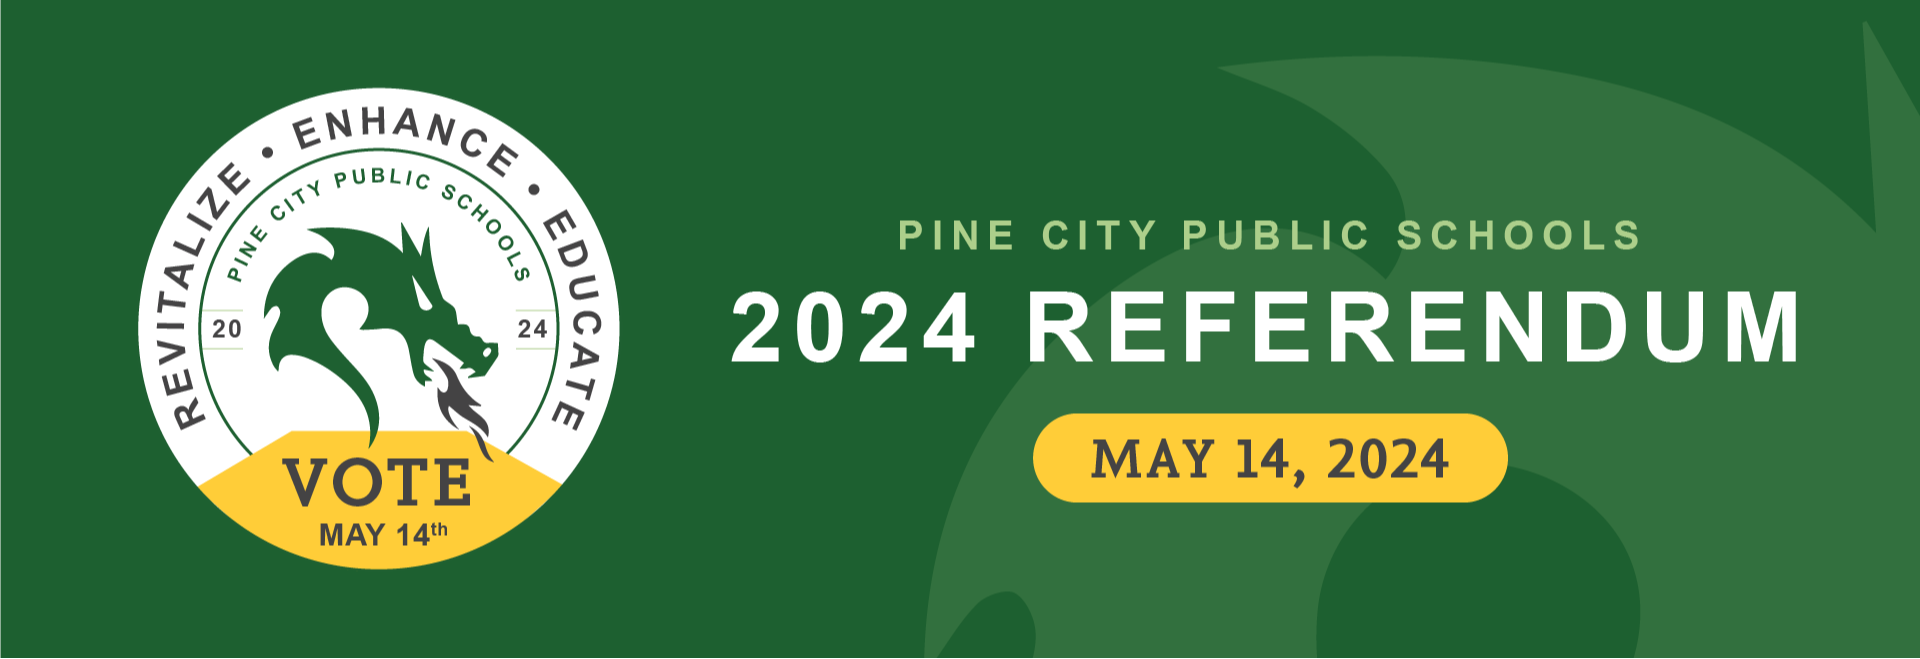 Pine City Public Schools 2024 Referendum